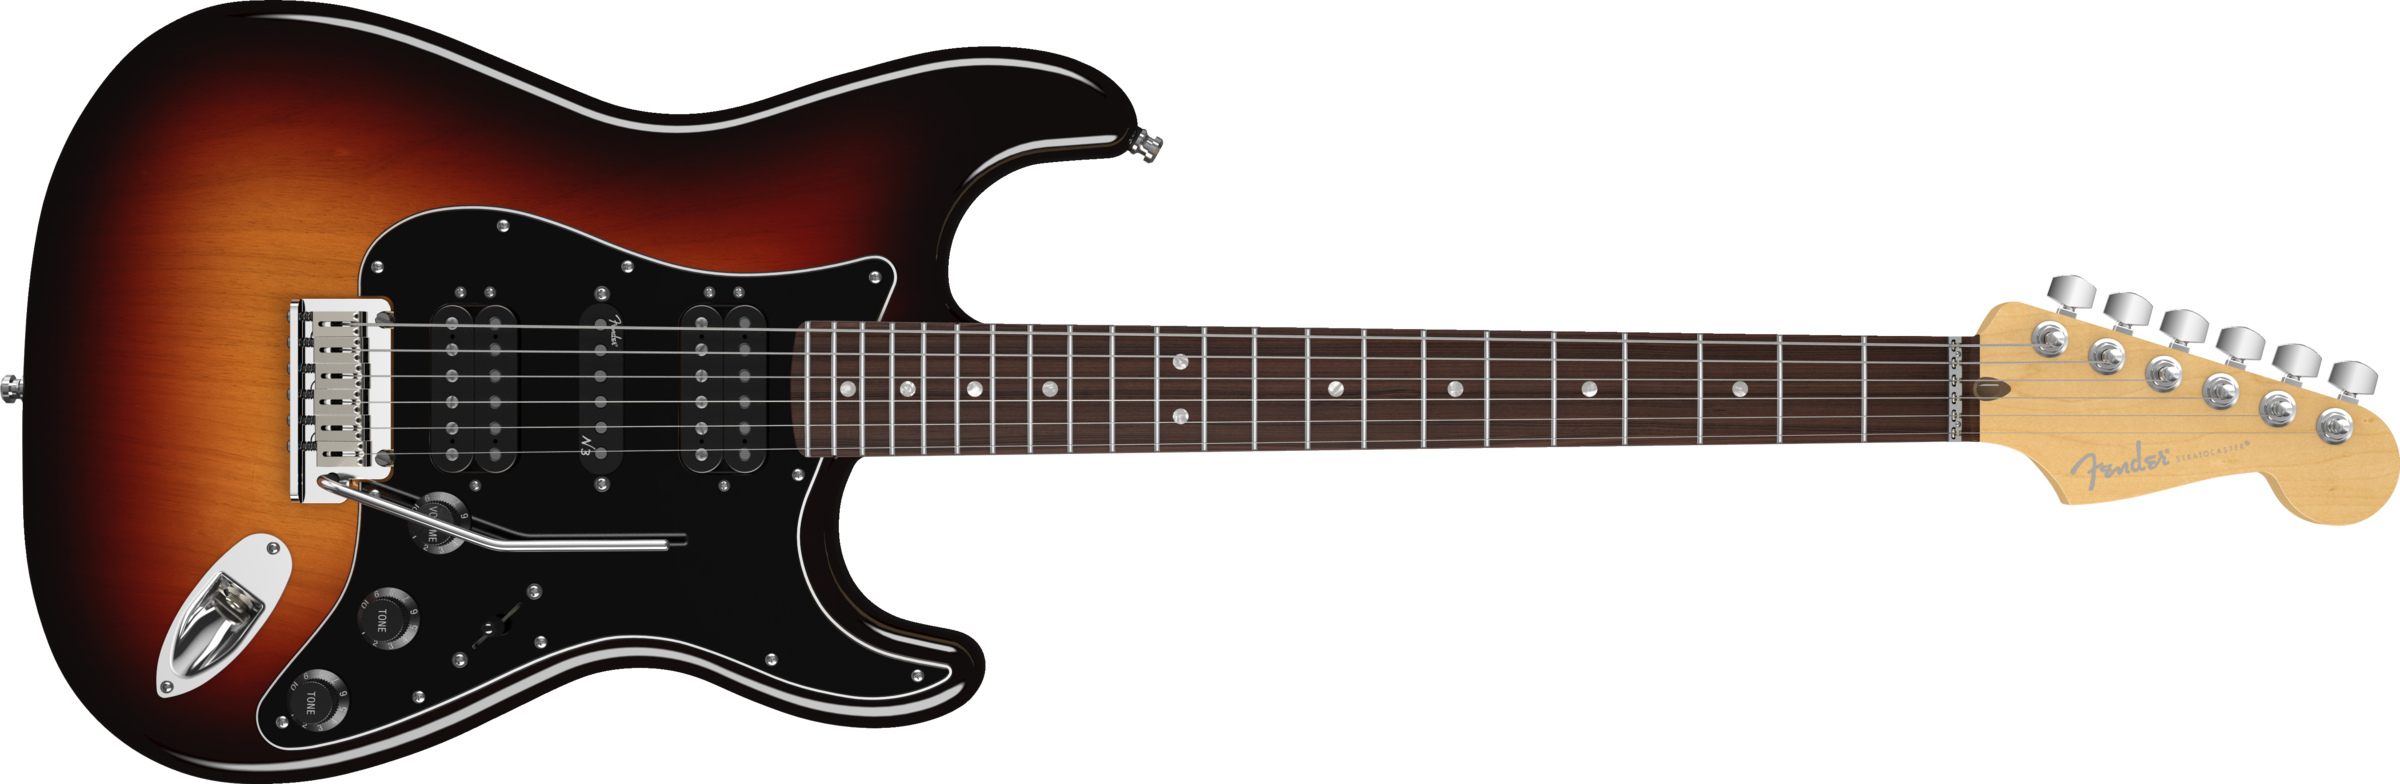 Electric Guitar Png - Guitar, Transparent background PNG HD thumbnail